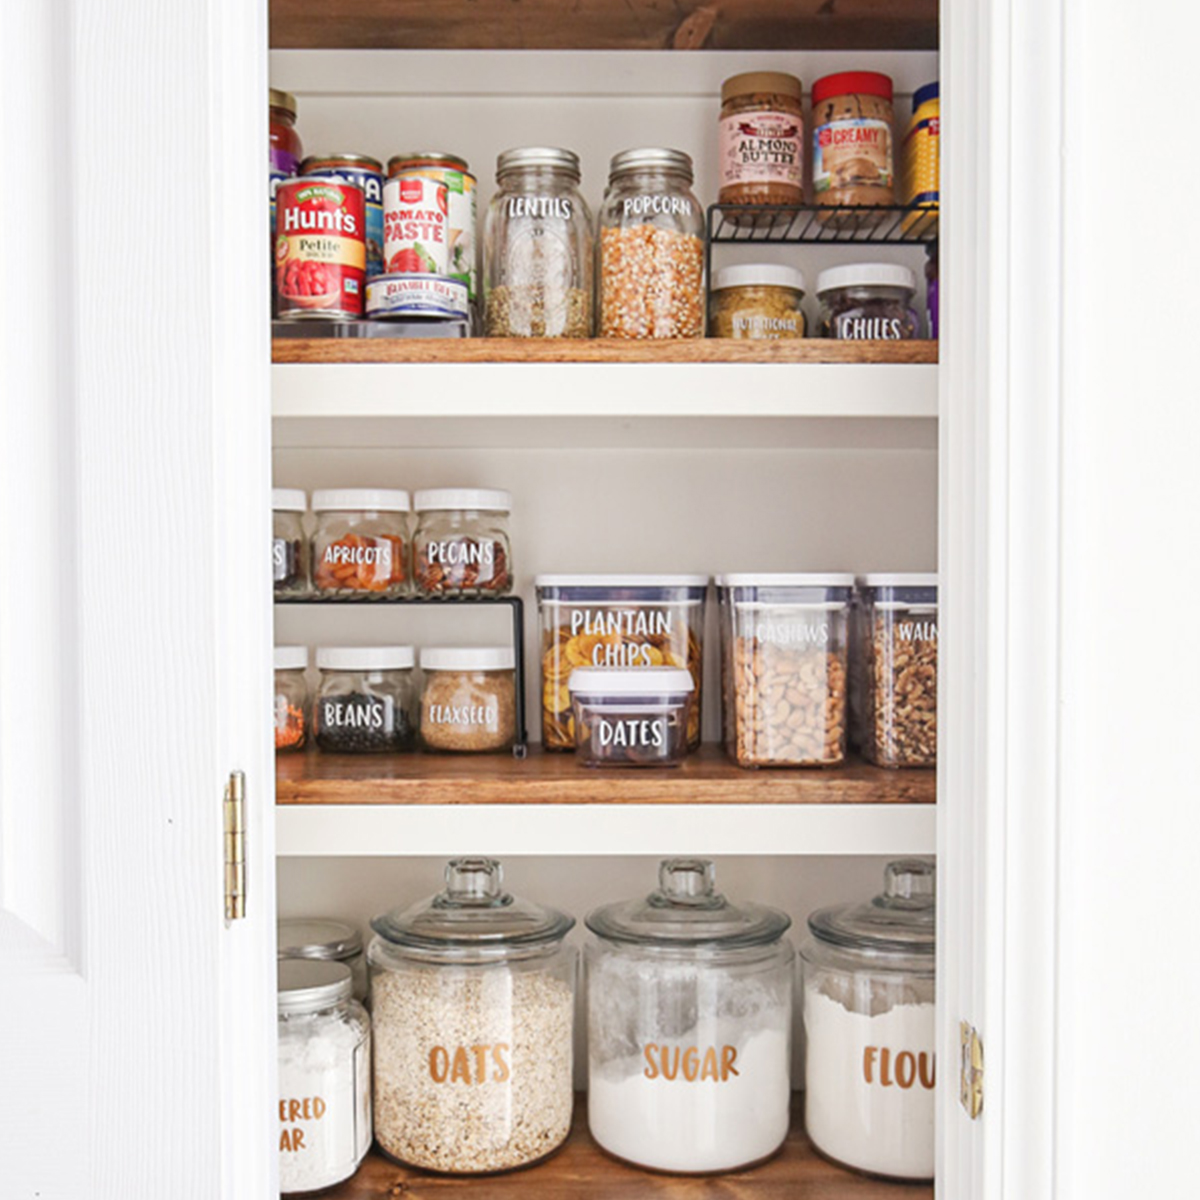 20 Incredible Small Pantry Organization Ideas and Makeovers  Small pantry  organization, Pantry remodel, Kitchen organization pantry